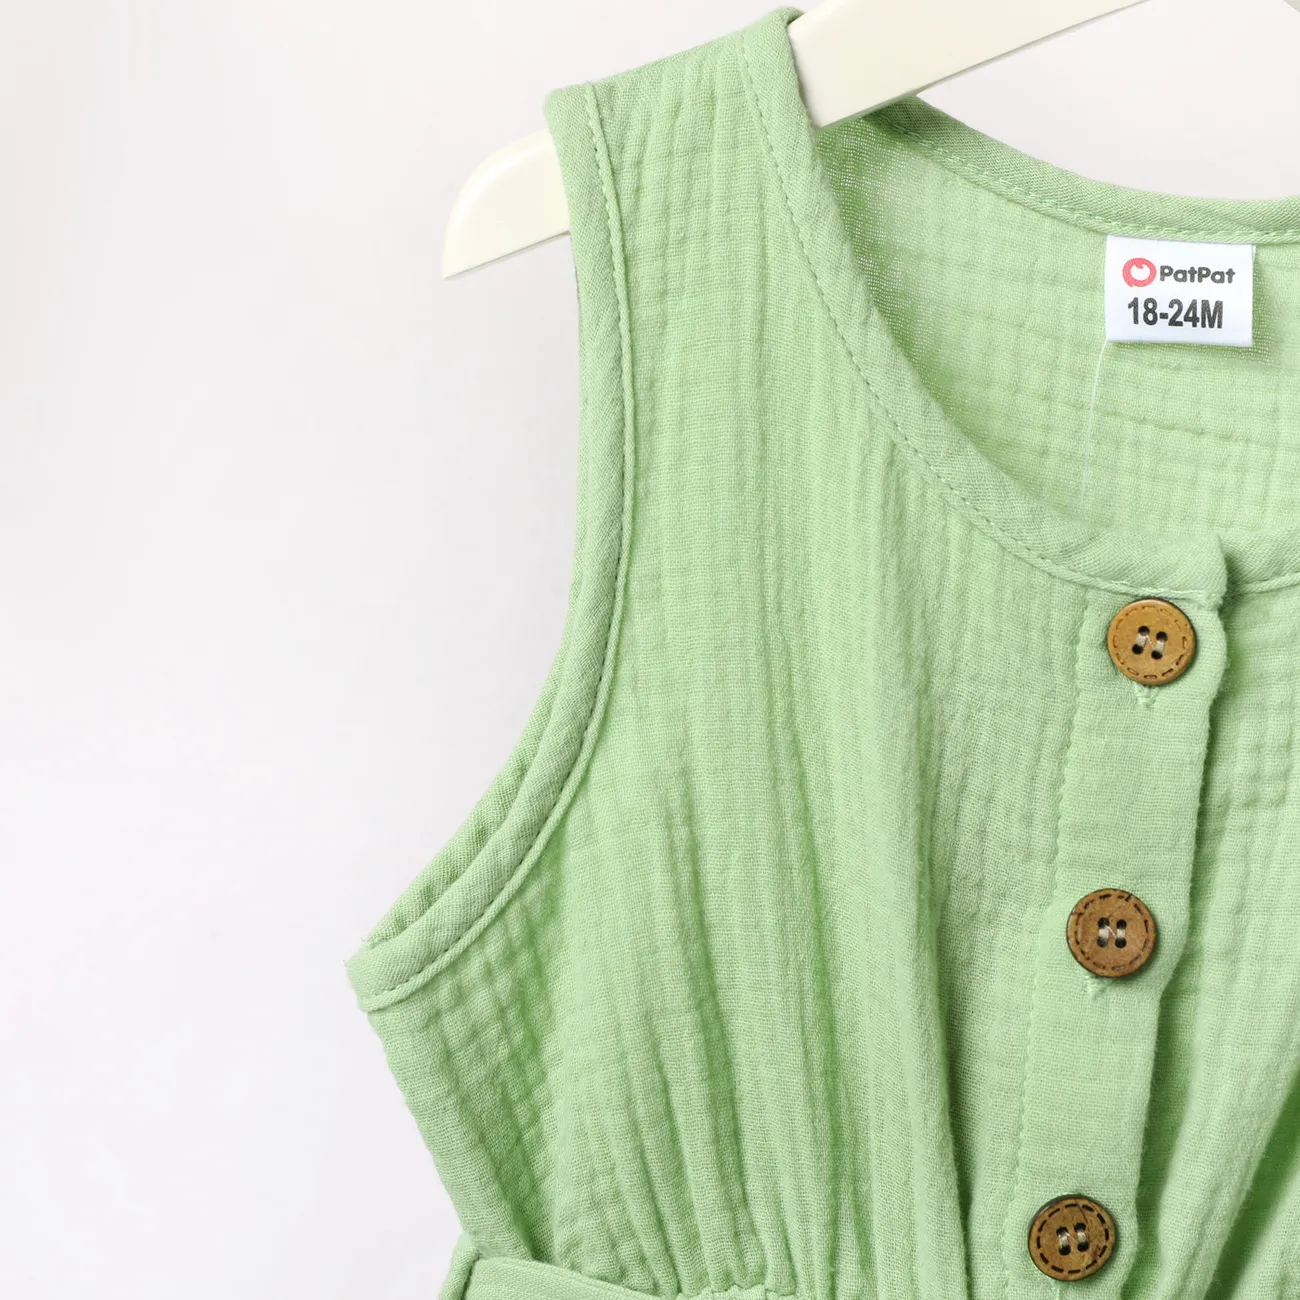 Toddler Girl 100% Cotton Solid Color Button Design Sleeveless Belted Romper Jumpsuit Shorts Light Green big image 1